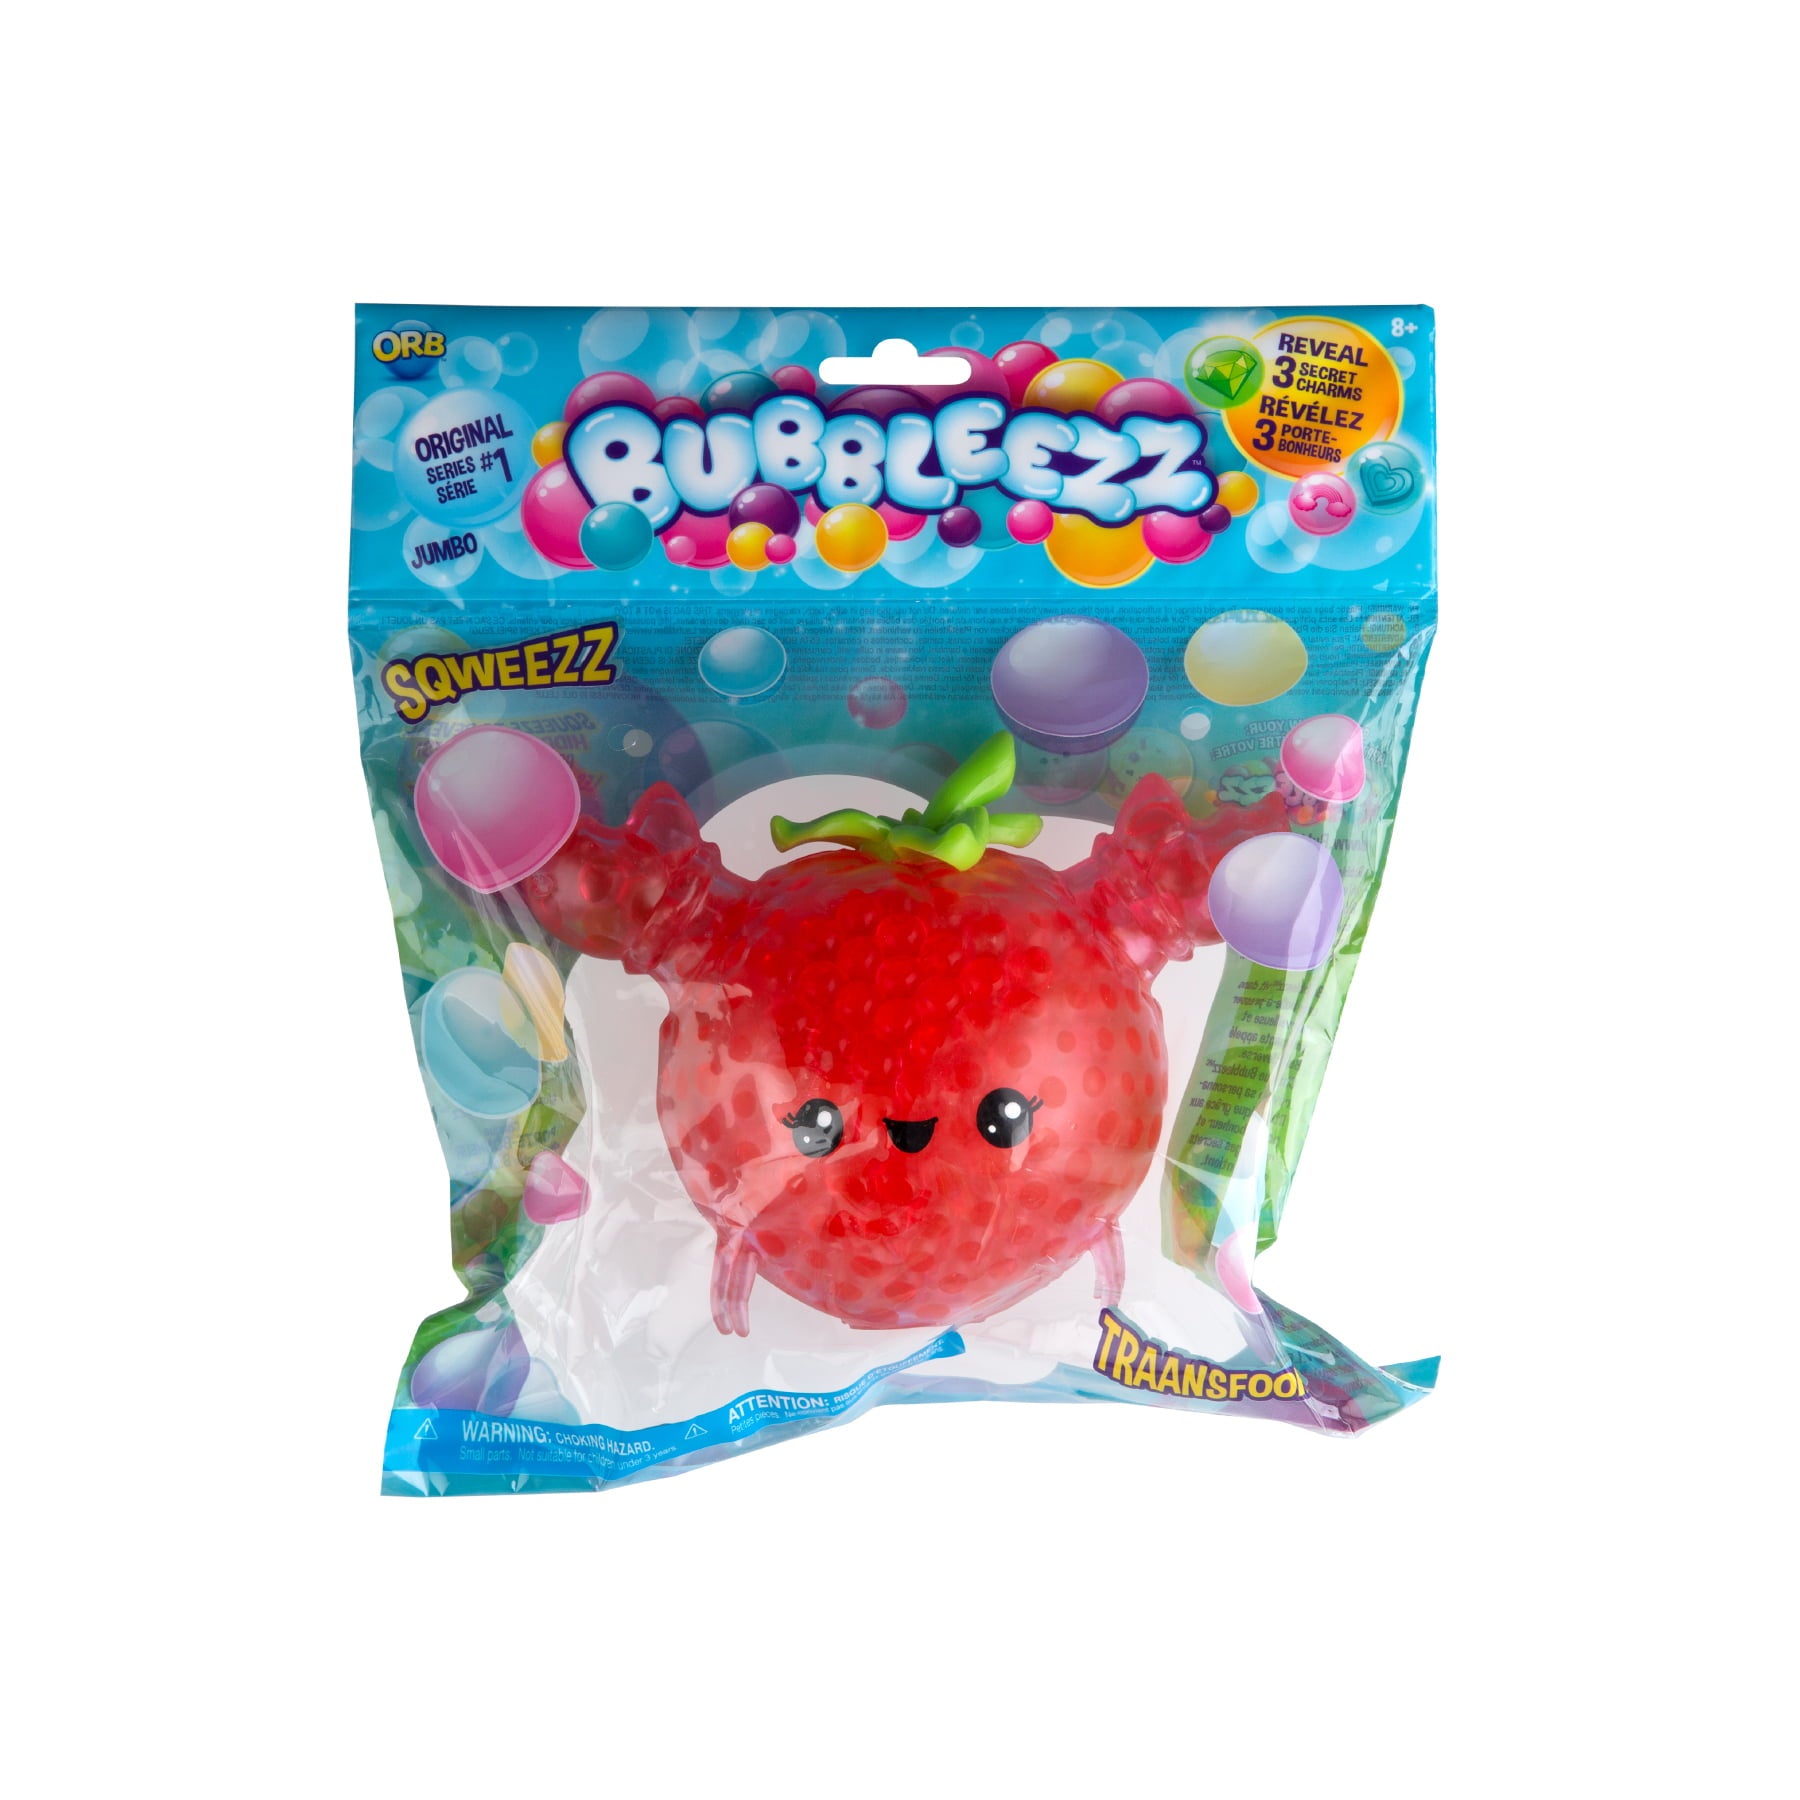 Orb Bubbleezz Jumbo Squeezable Toy Series 1, Assorted